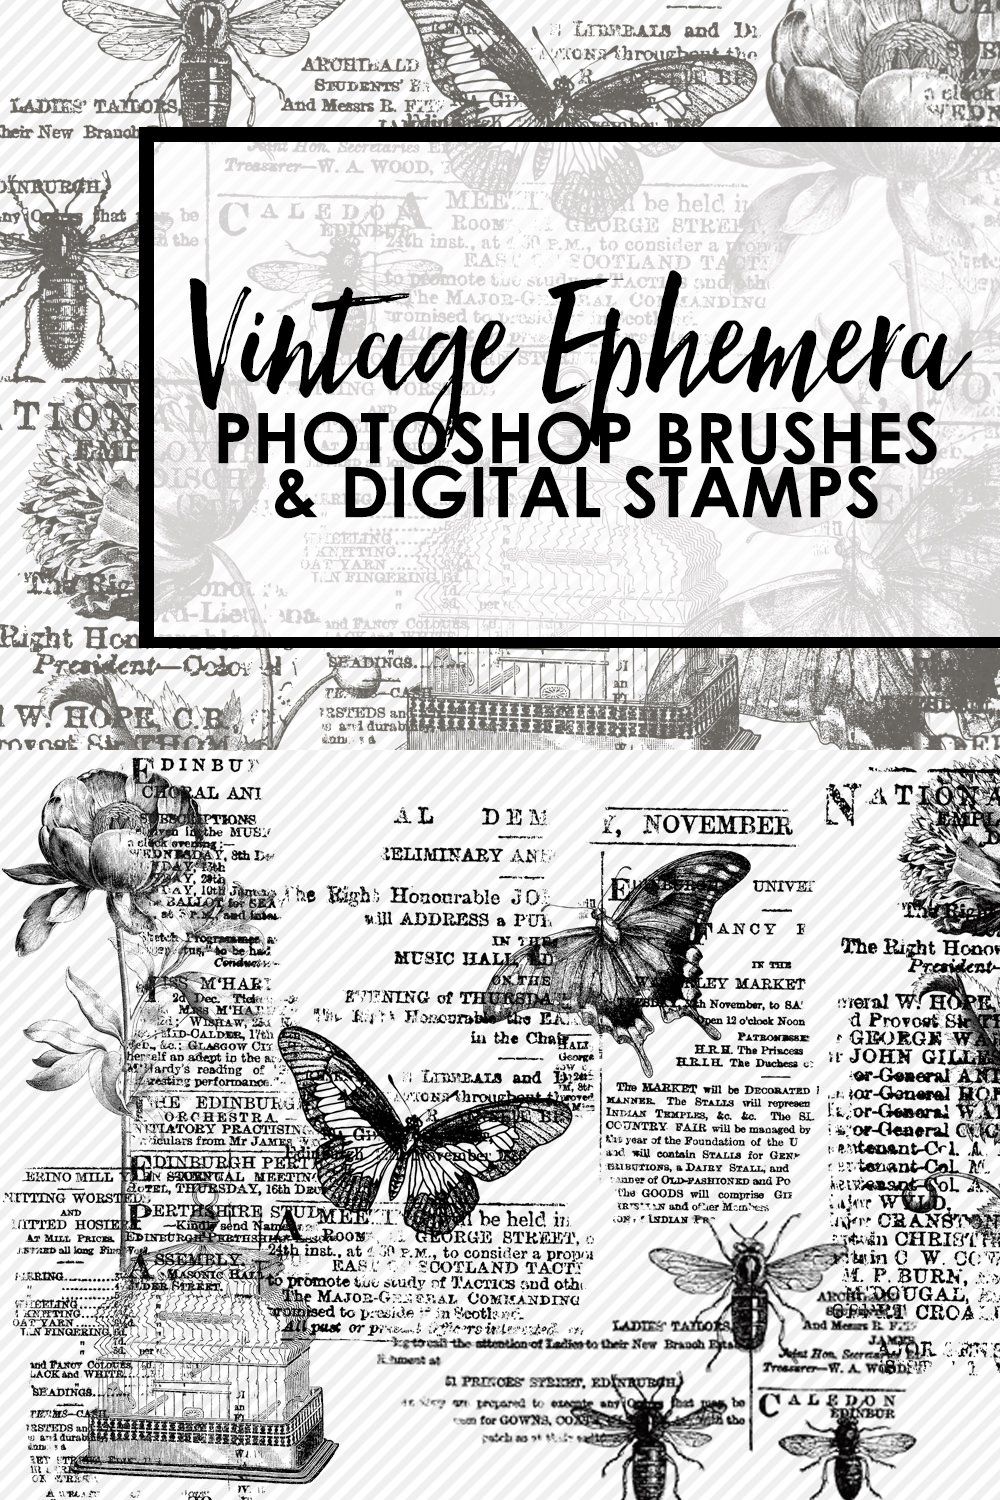 Vintage Ephemera PS Brushes & Stamps pinterest preview image.